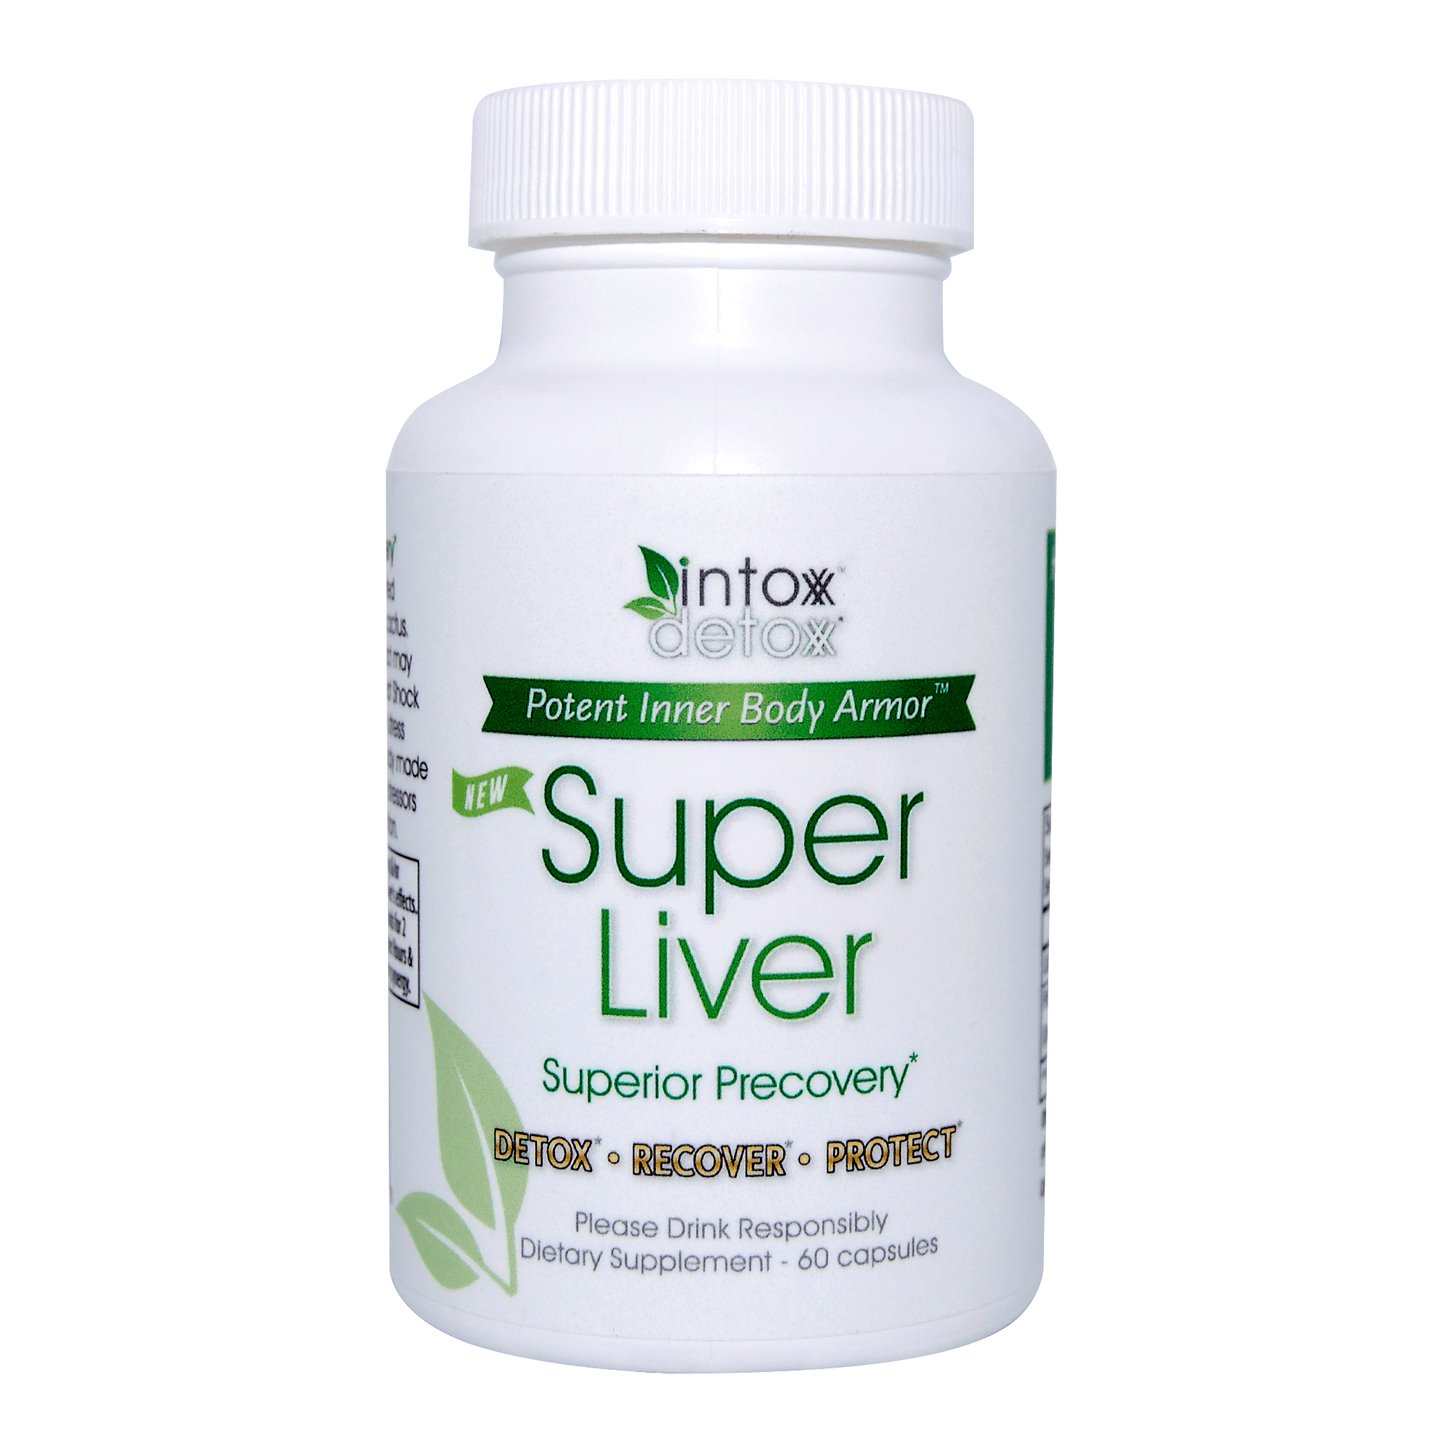 Super Liver Superior Precovery - 60 capsules | NEW!